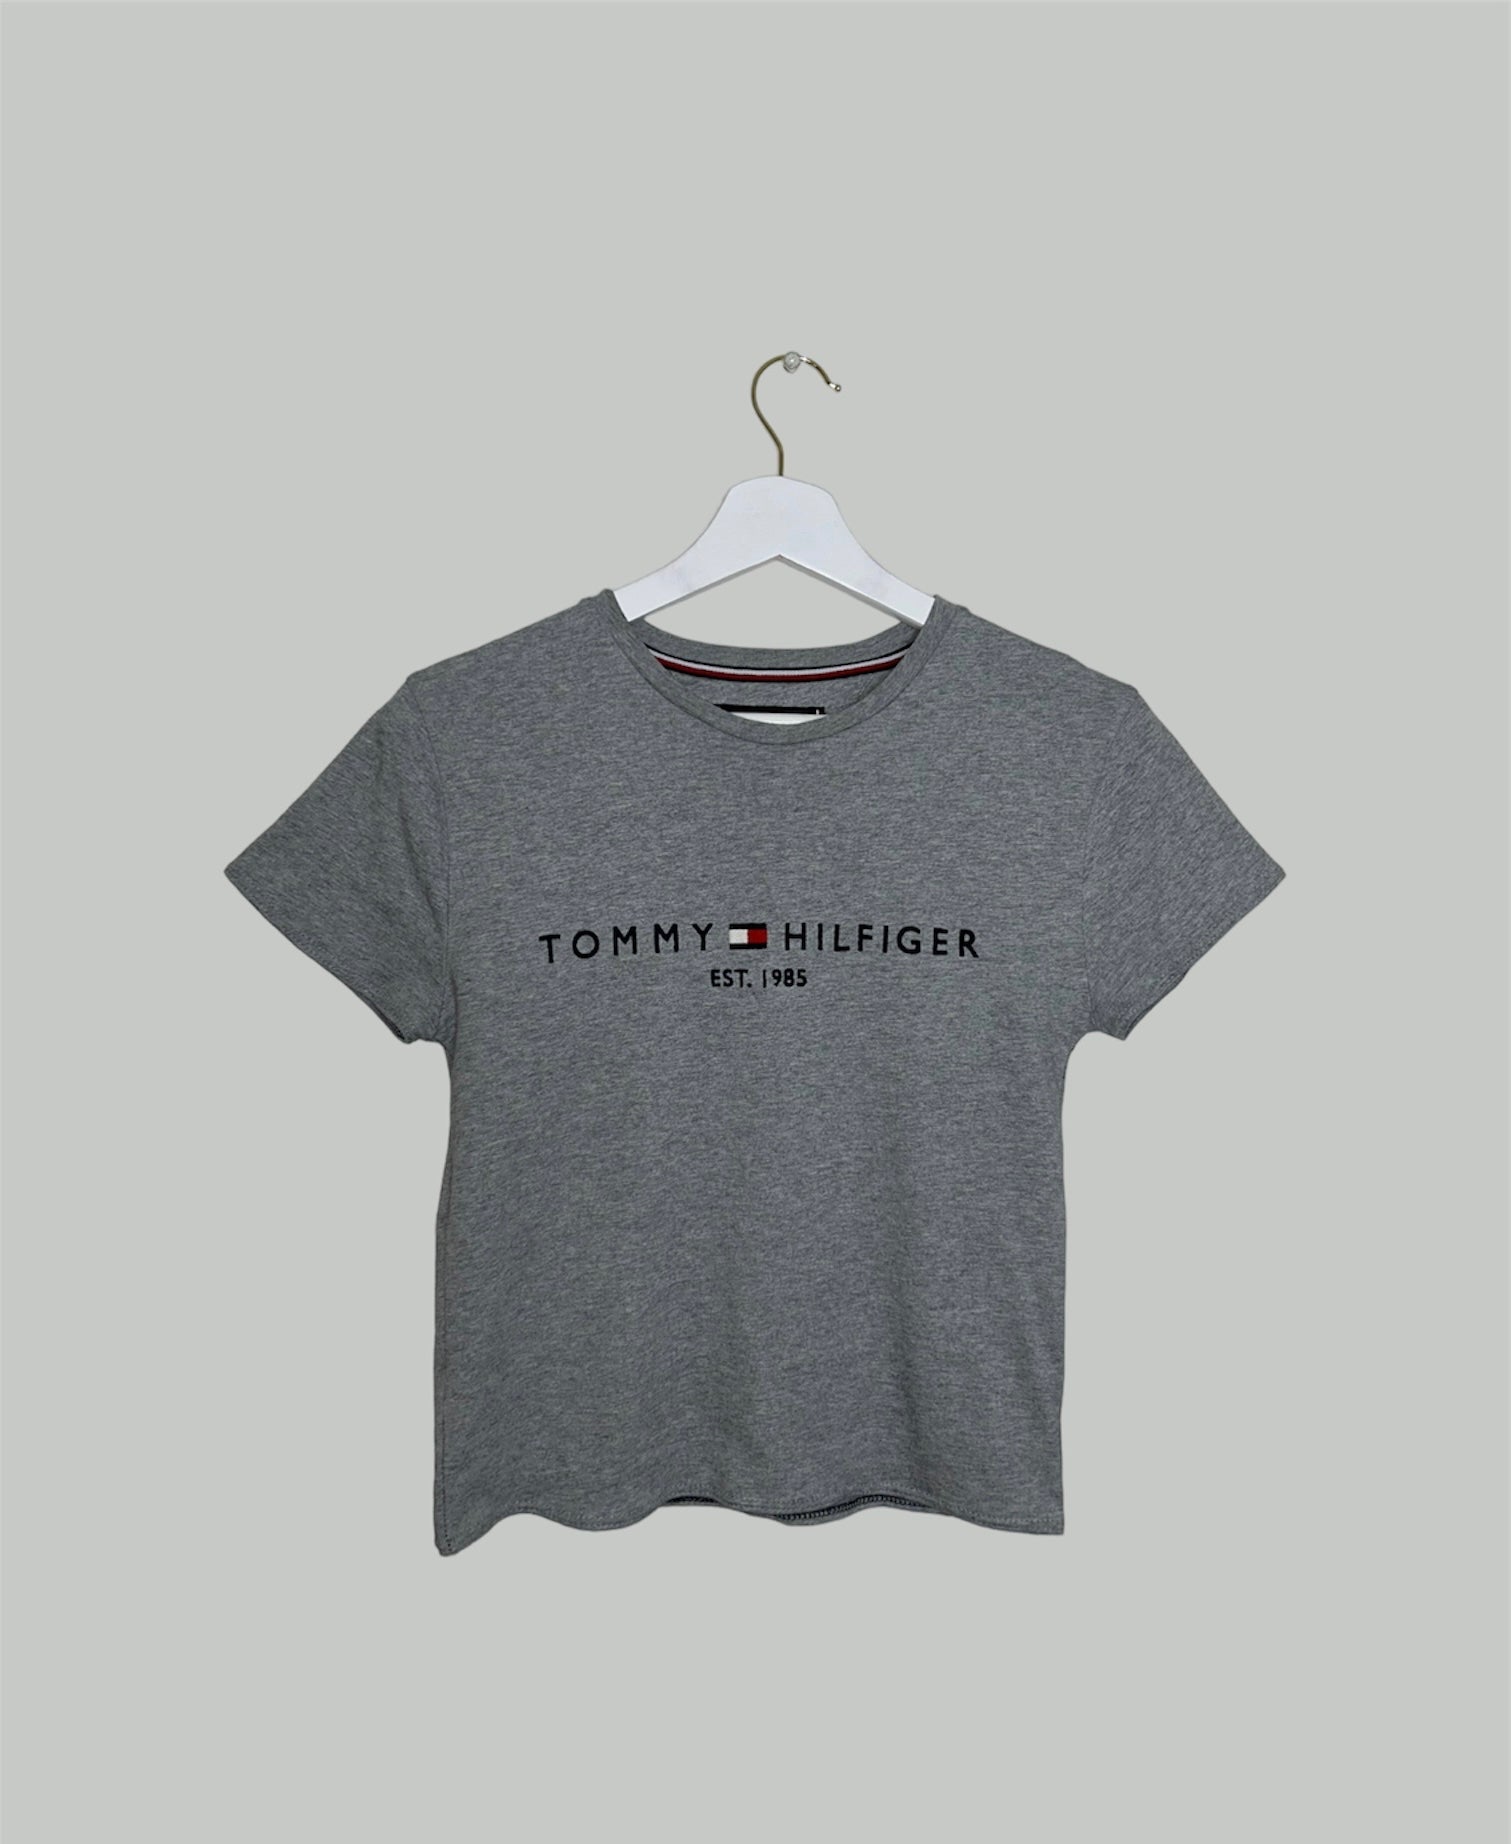 grey short sleeve crop top with black tommy hilfiger logo